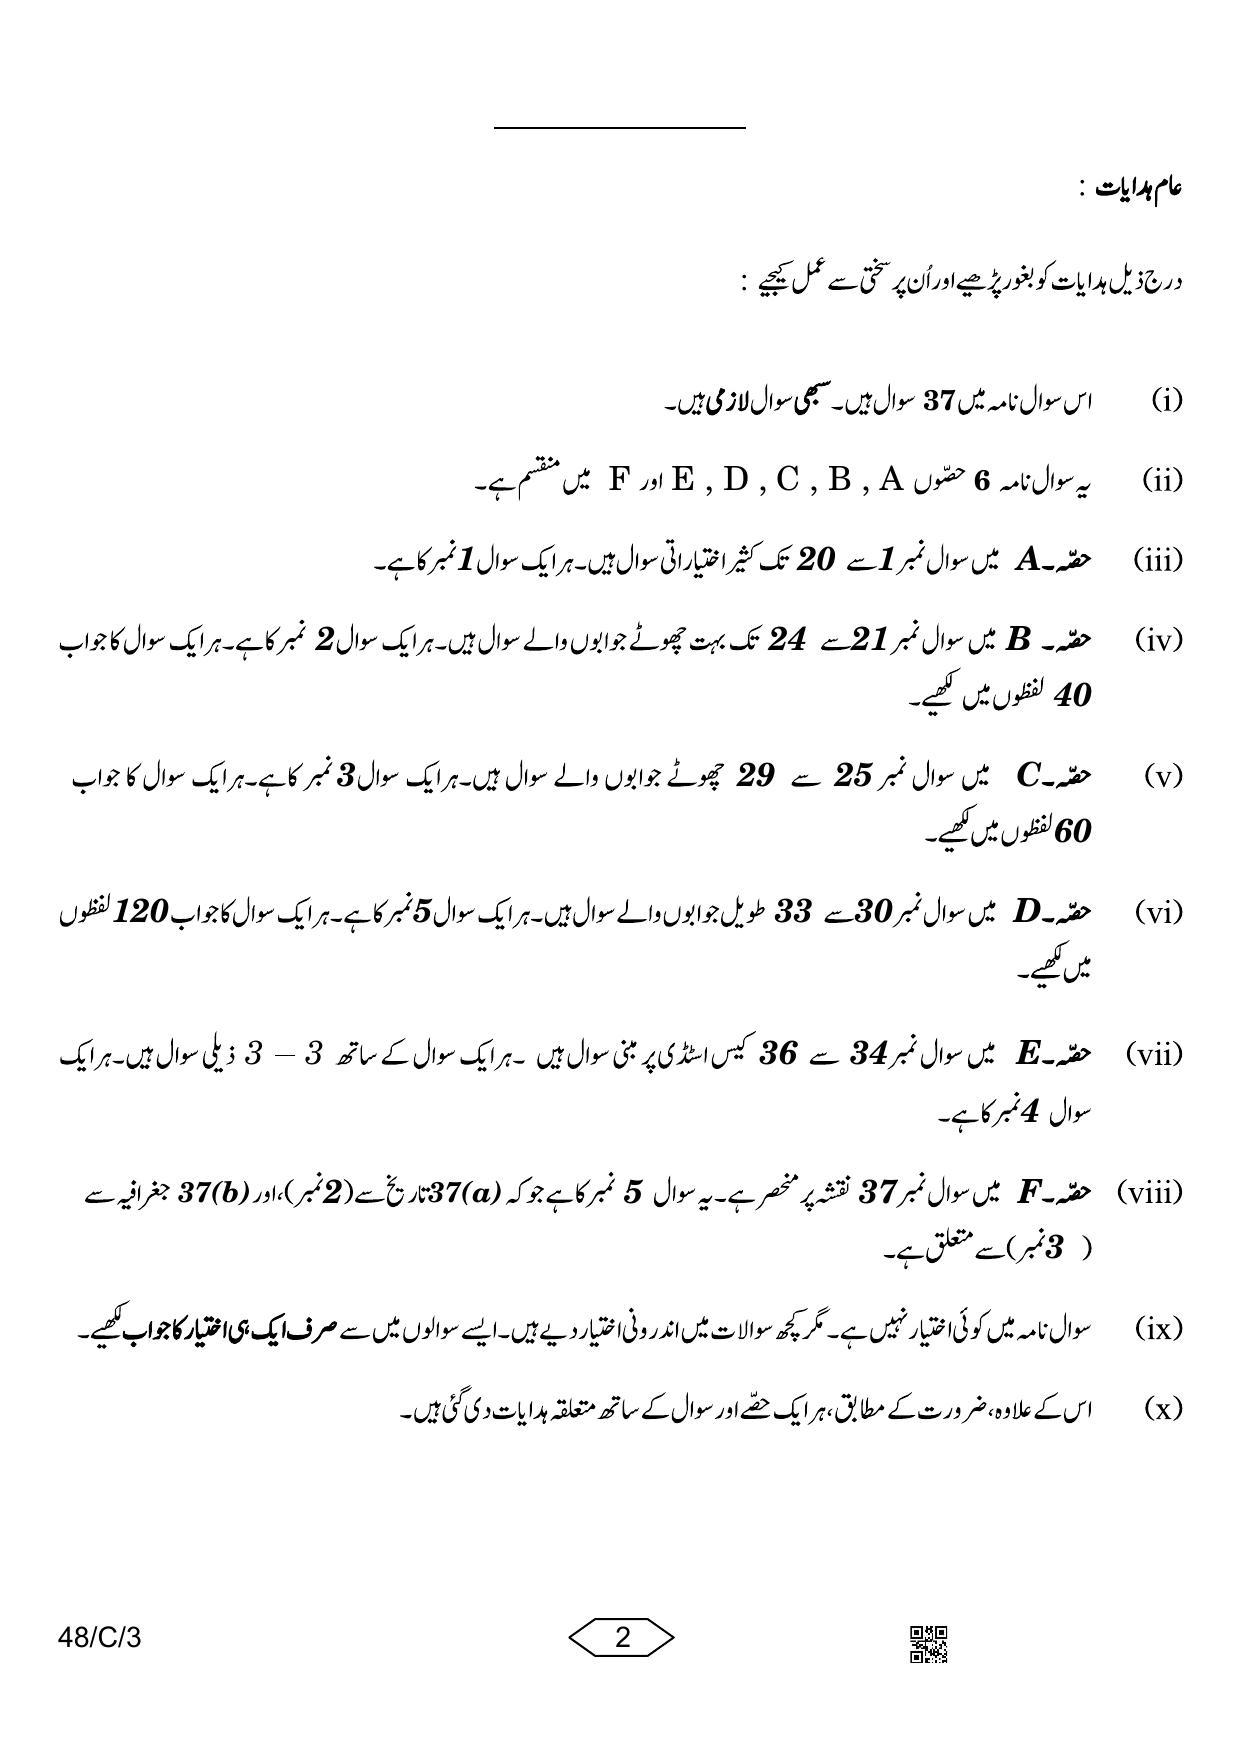 CBSE Class 10 48-3 Social Science Urdu 2023 (Compartment) Question Paper - Page 2